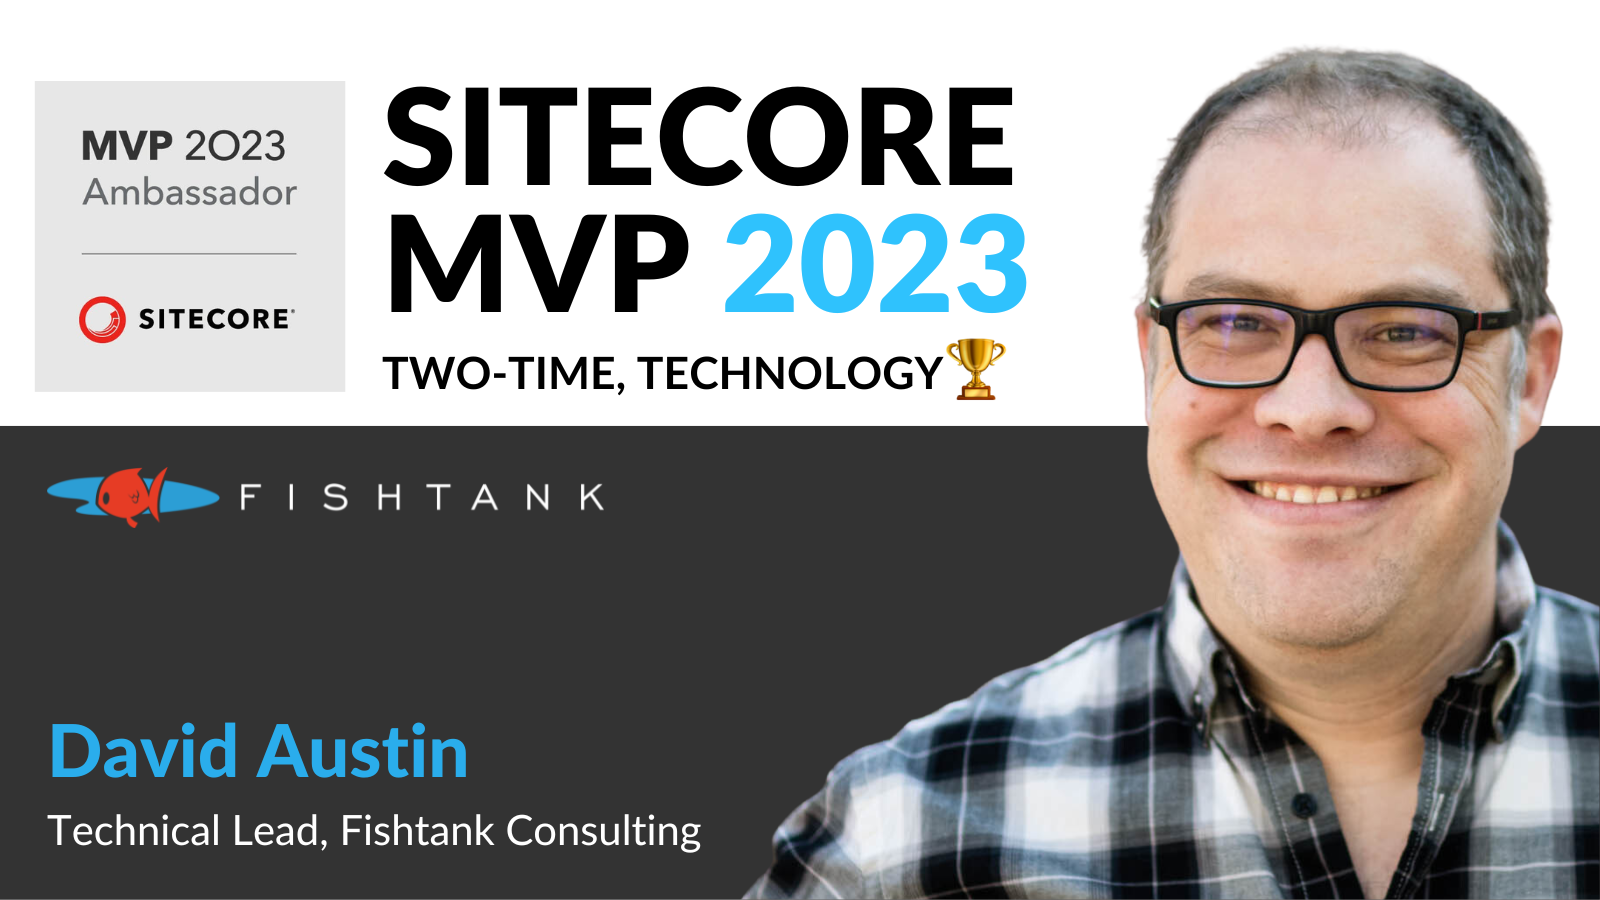 David Austin of Fishtank Consulting Wins Sitecore MVP 2023 for Technology